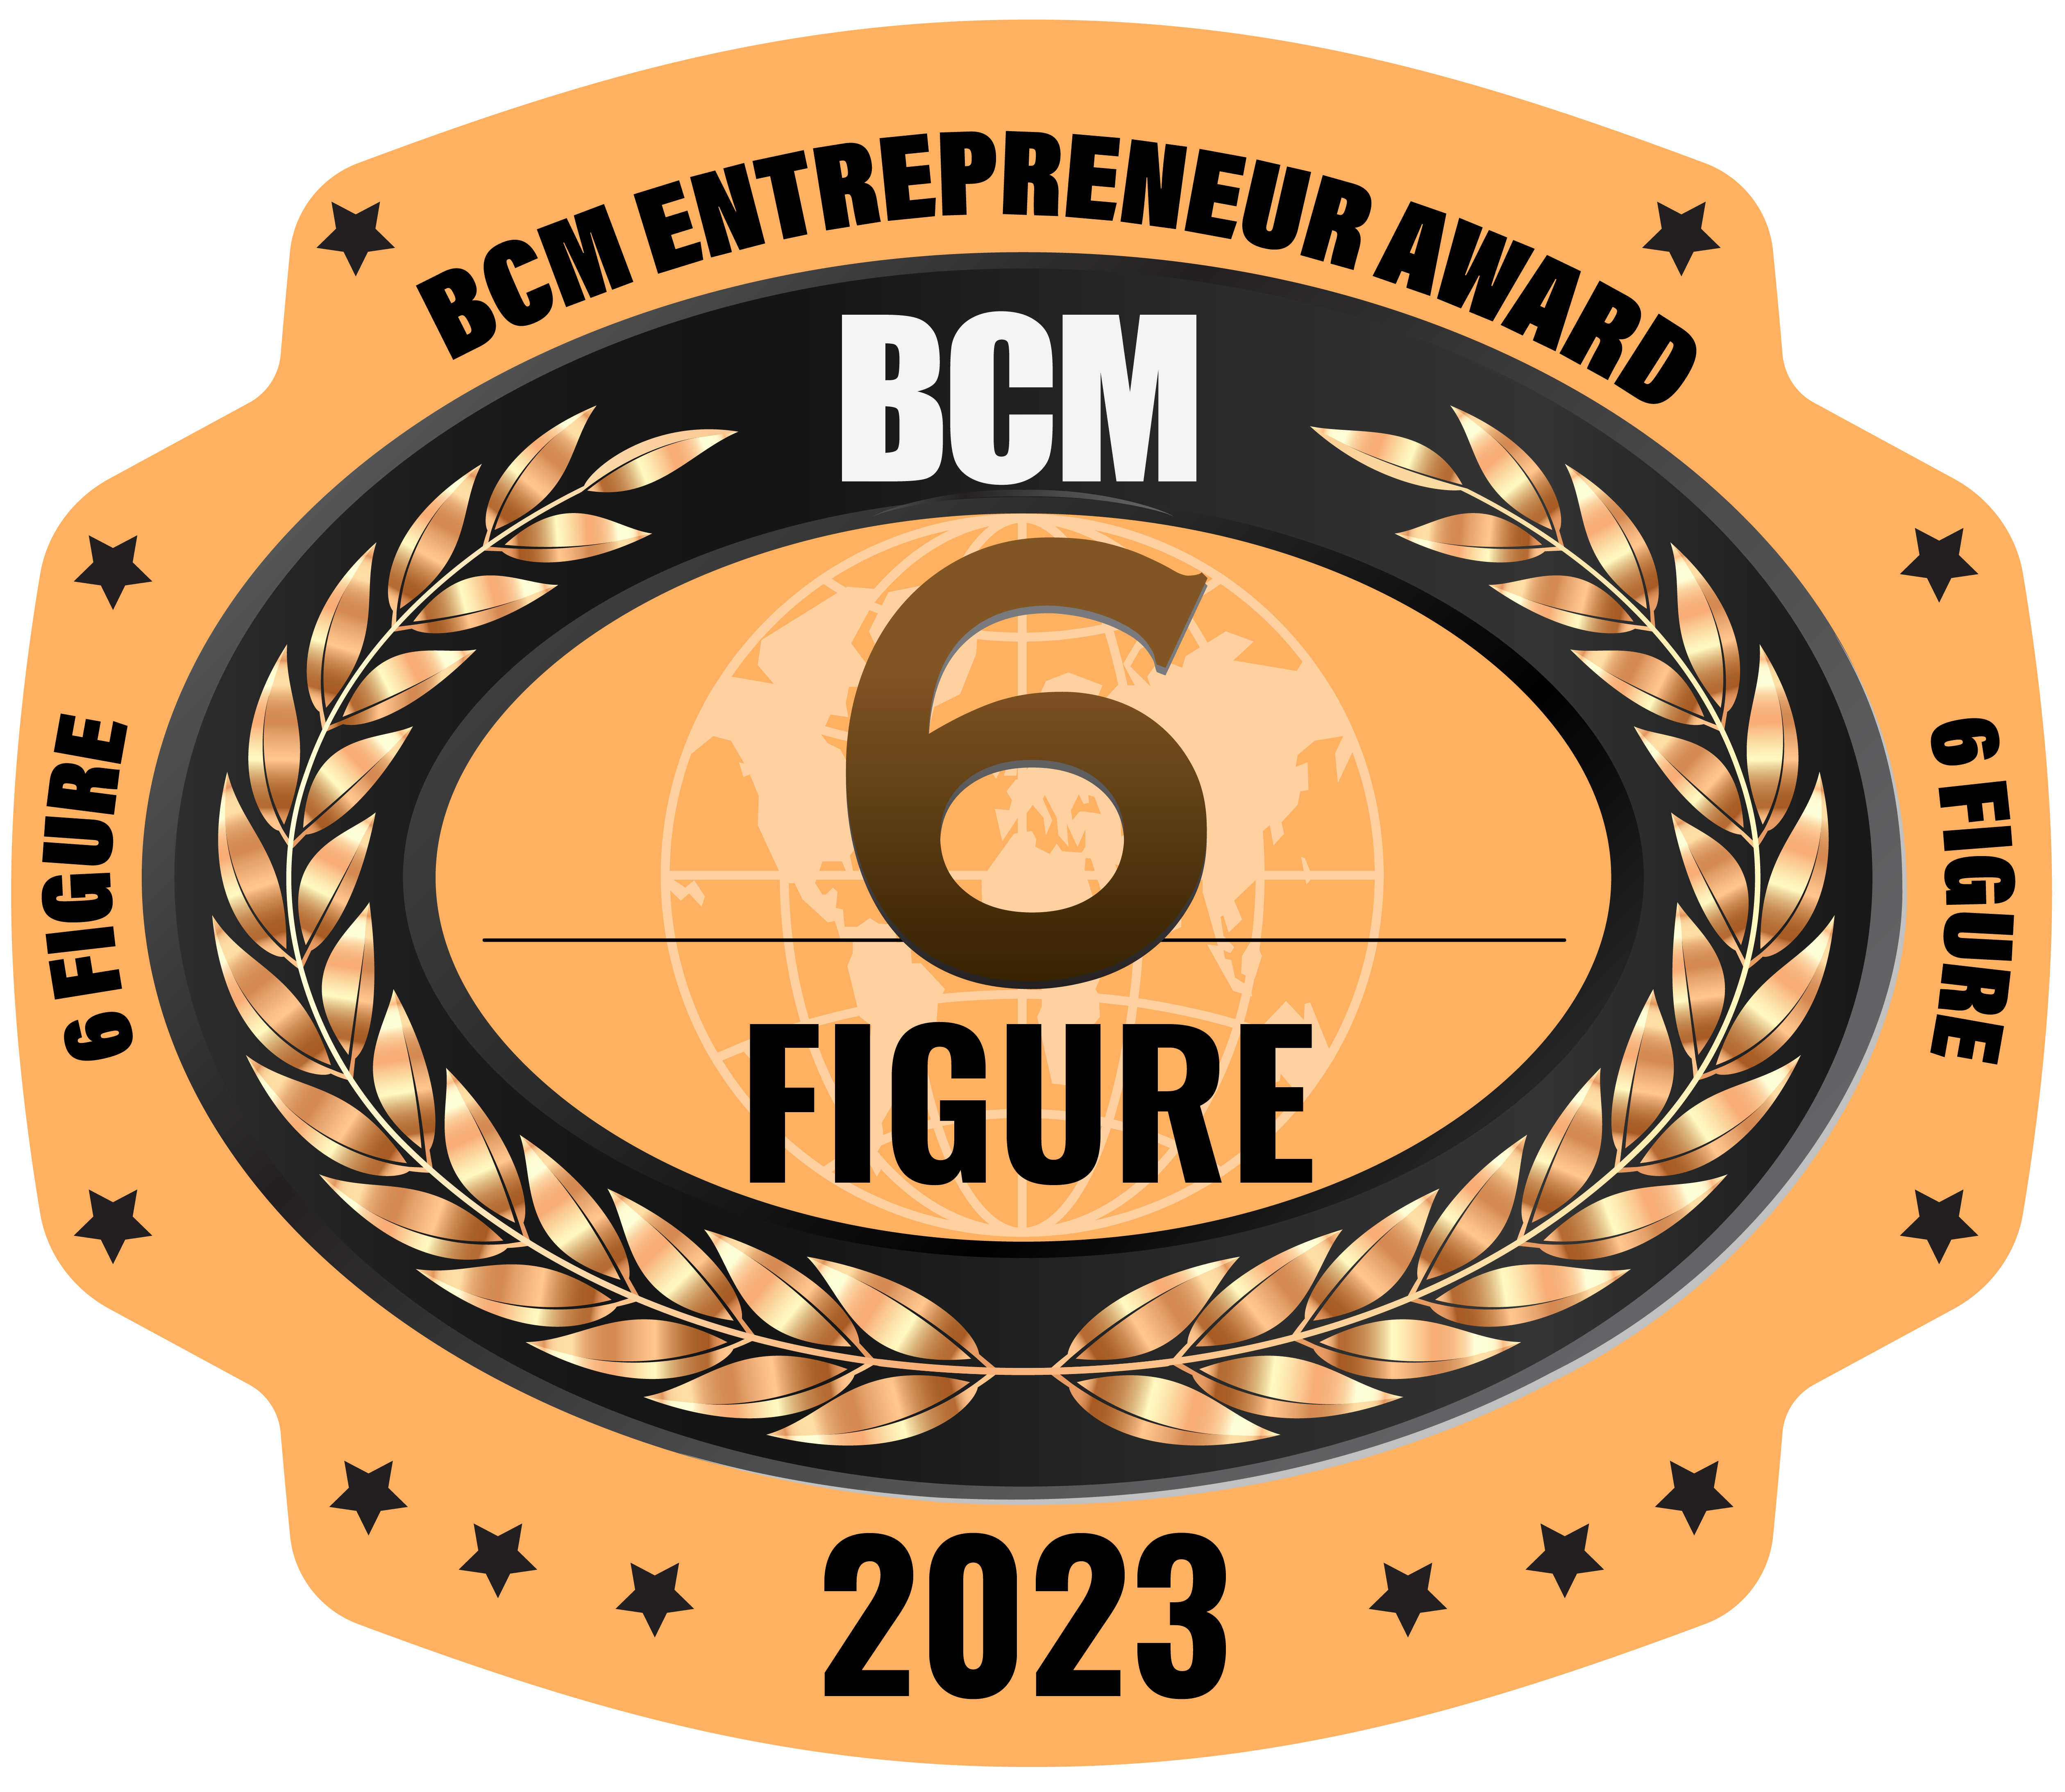 Entrepreneur Award 6 Figure Logo